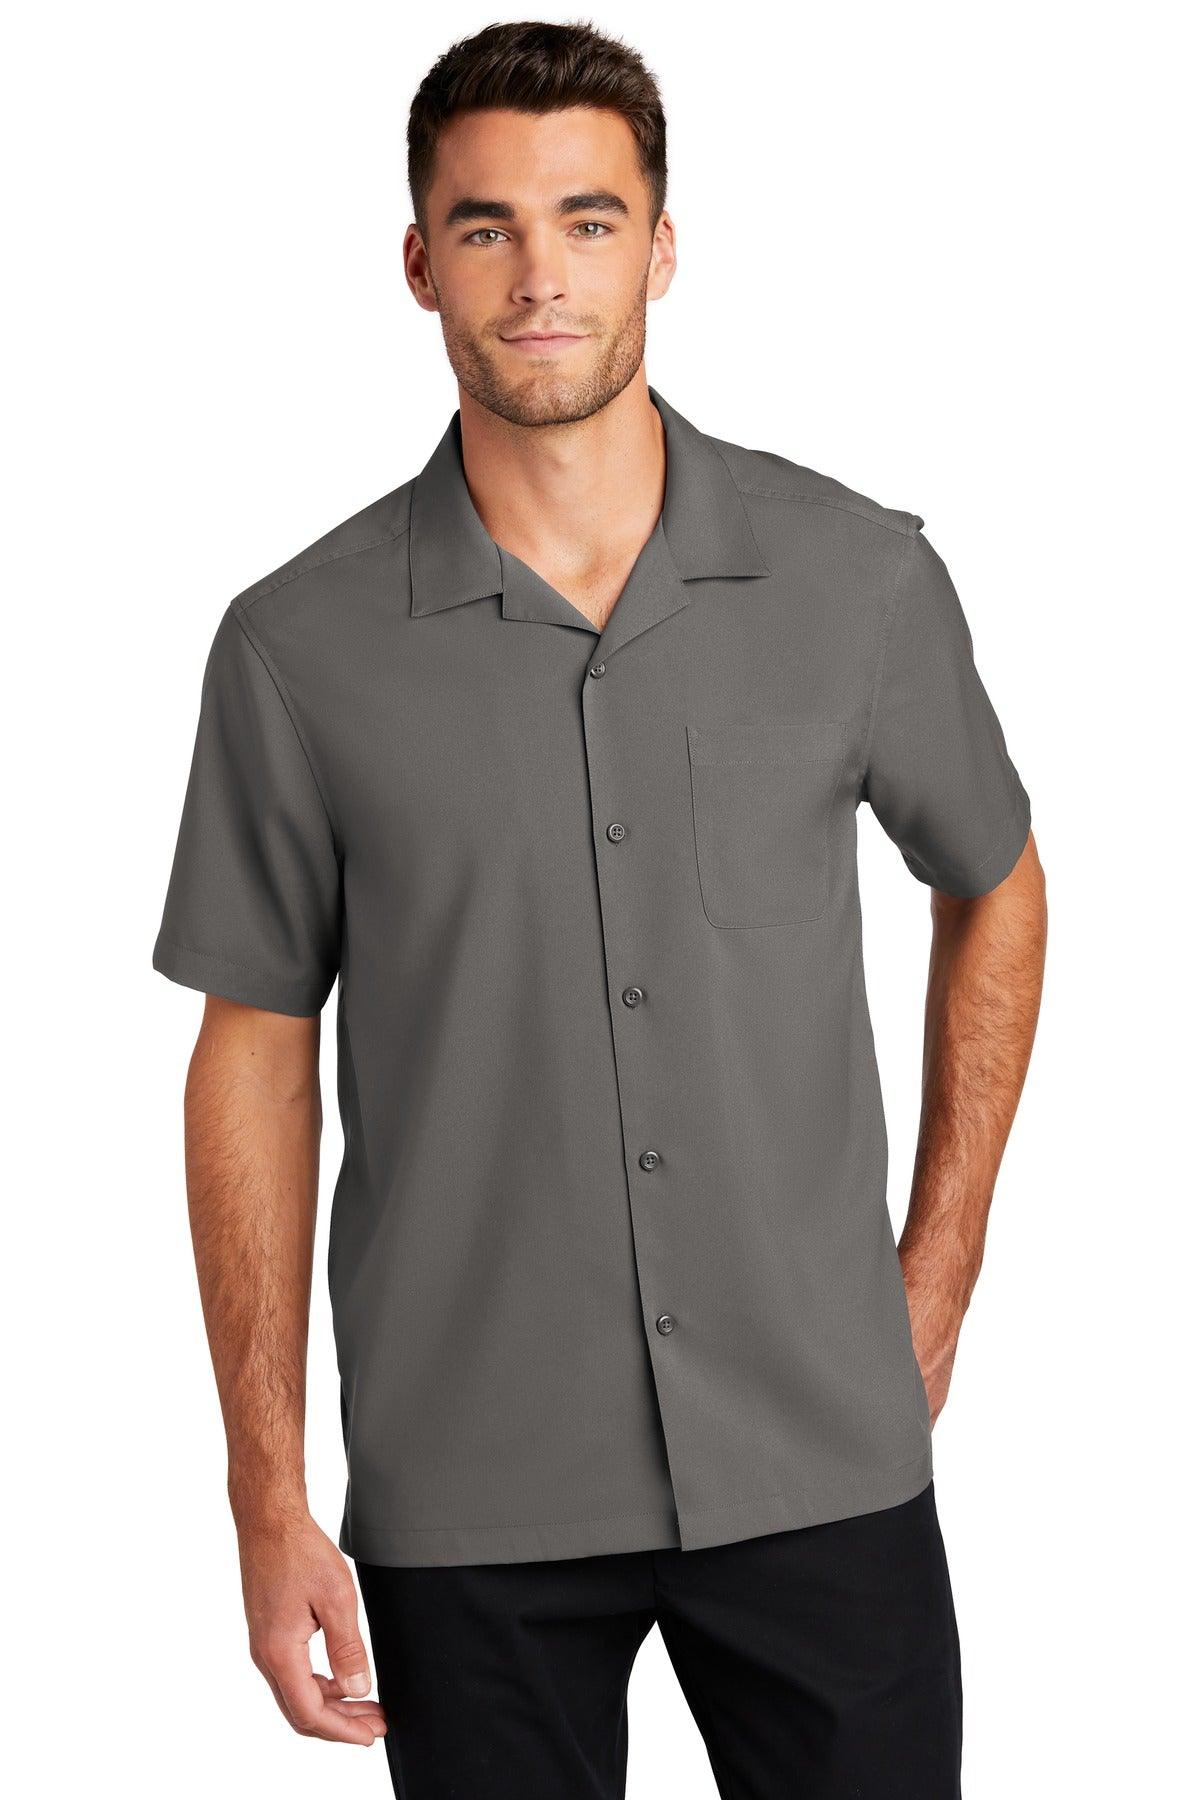 Port Authority Short Sleeve Performance Staff Shirt W400 - Dresses Max